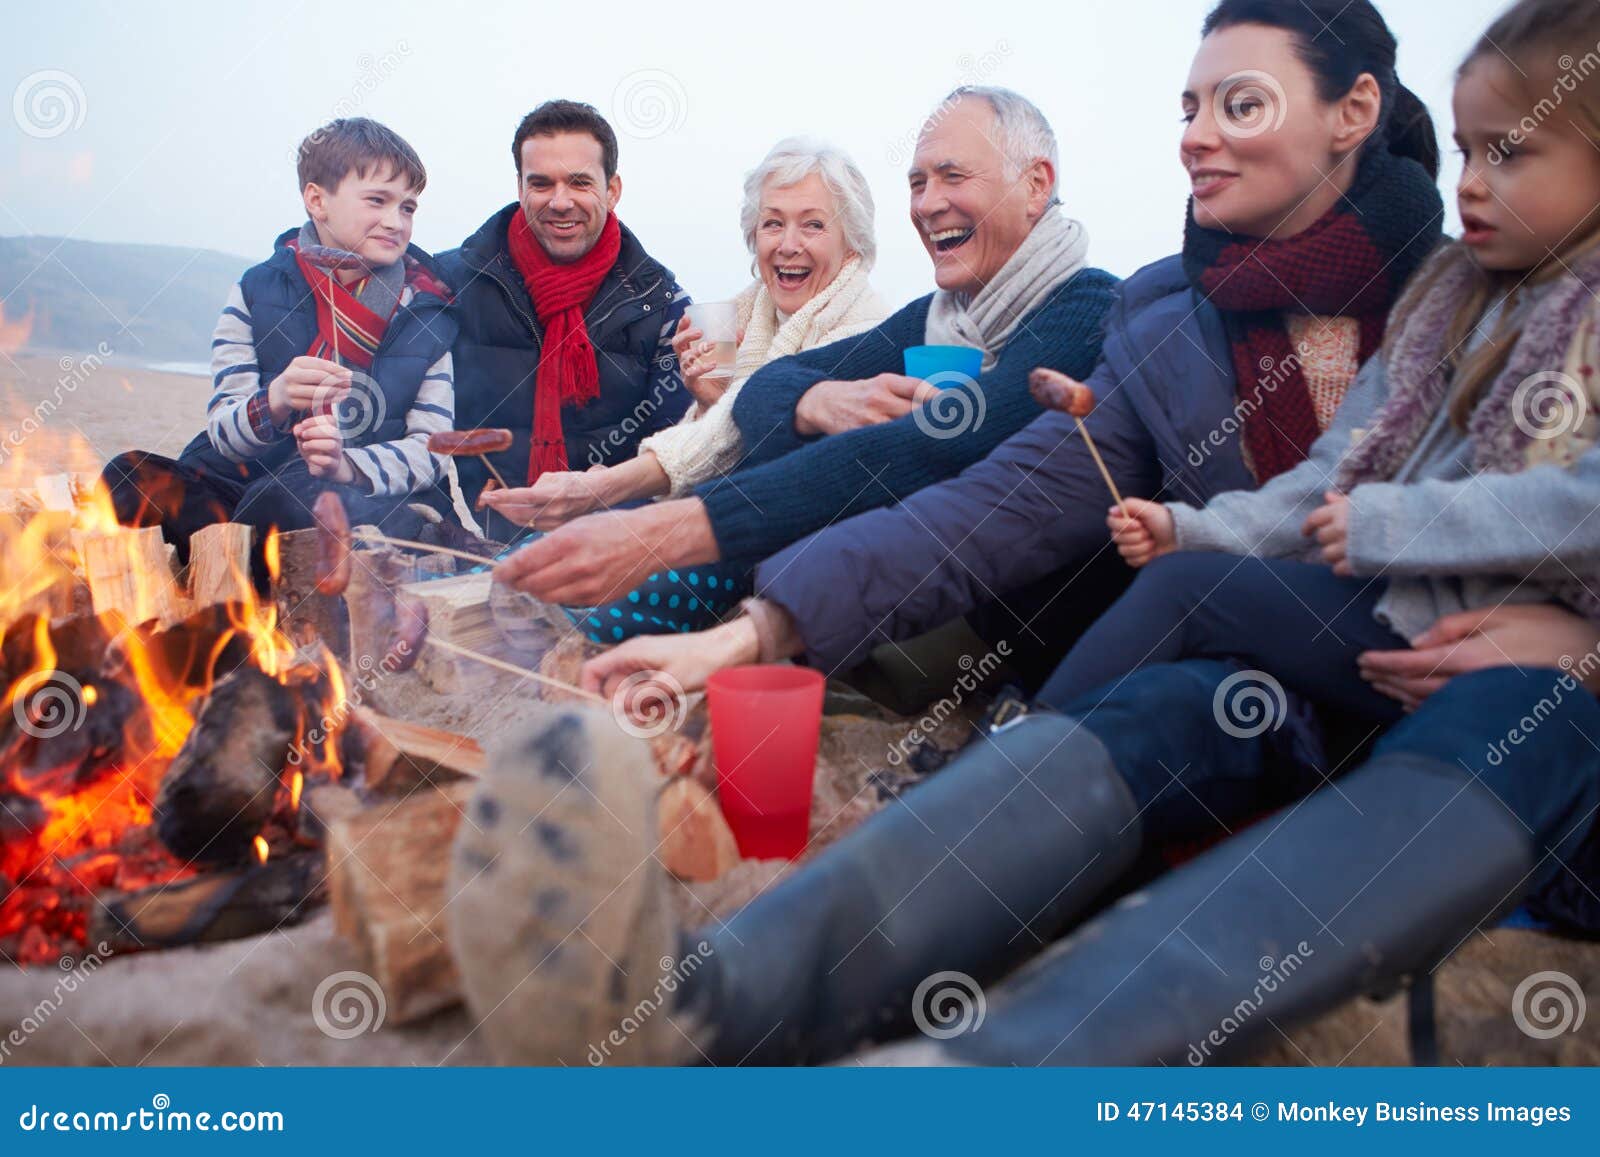 multi generation family having barbeque on winter beach